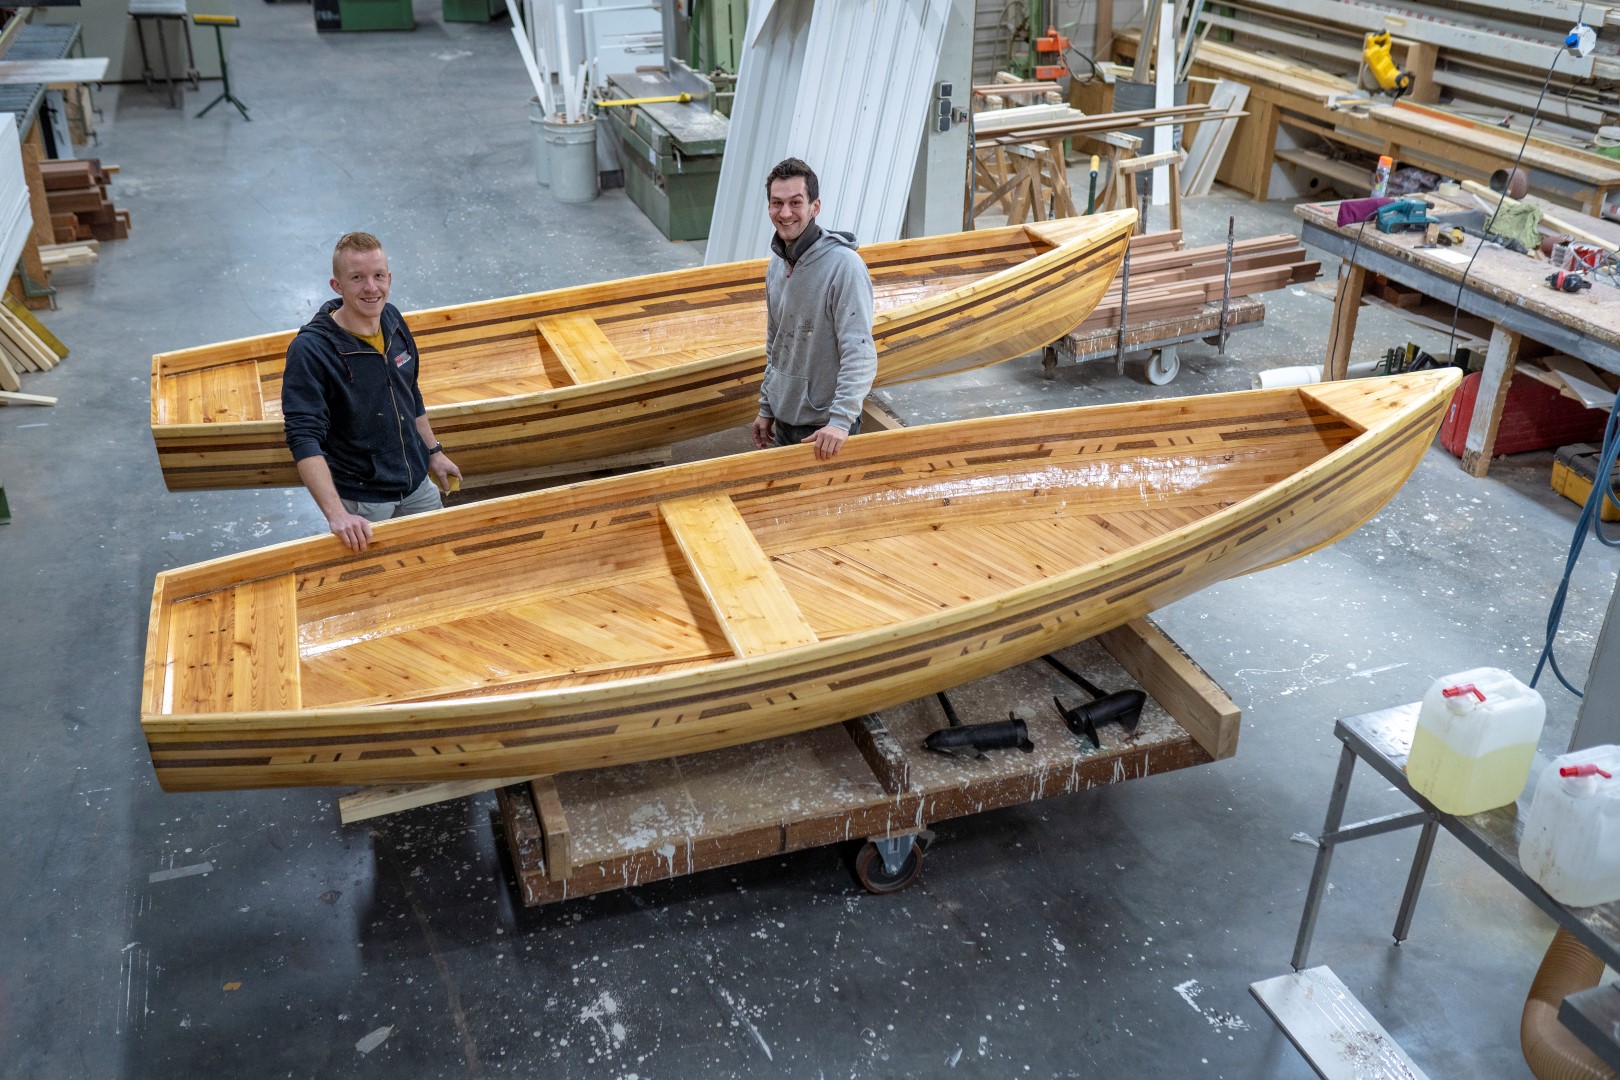 Wordt erger Draad Van Timmervrienden bouwen eigen boot; zaterdag tewaterlating in  Nieuw-Lekkerland - Alblasserdamsnieuws.nl